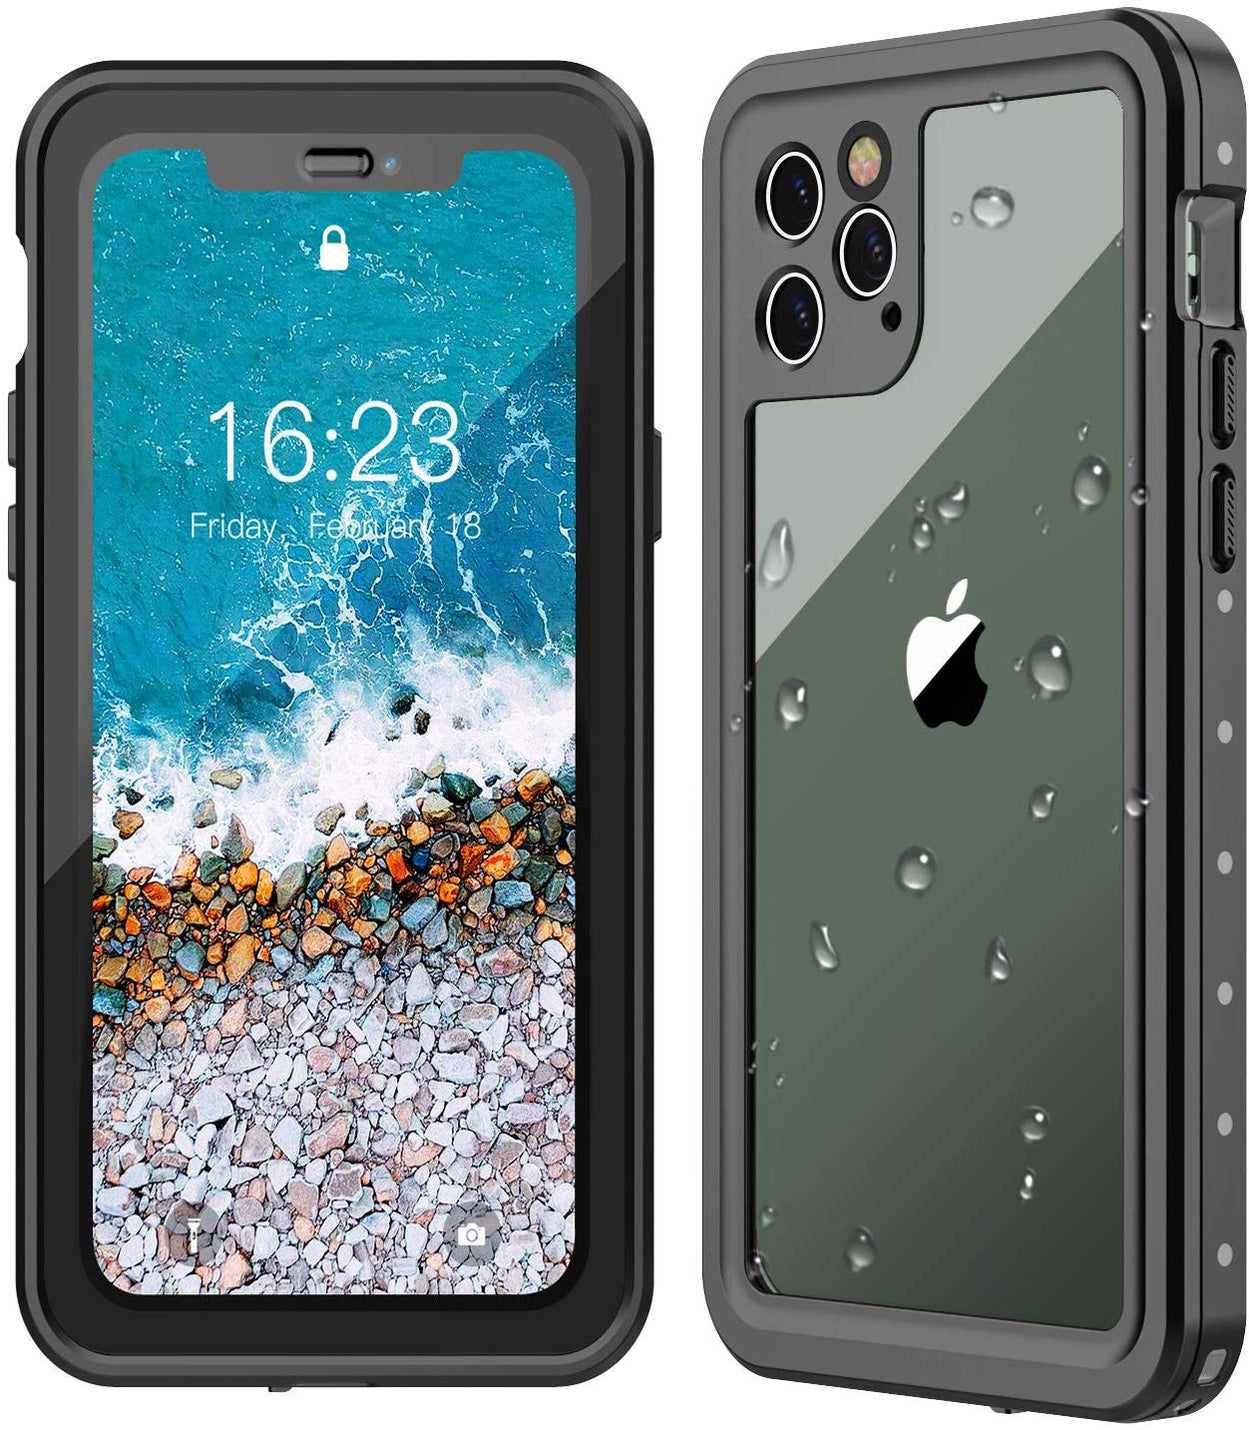 Waterproof Shockproof Dustproof Snowproof Case for iPhone 11 Pro *Free Shipping*